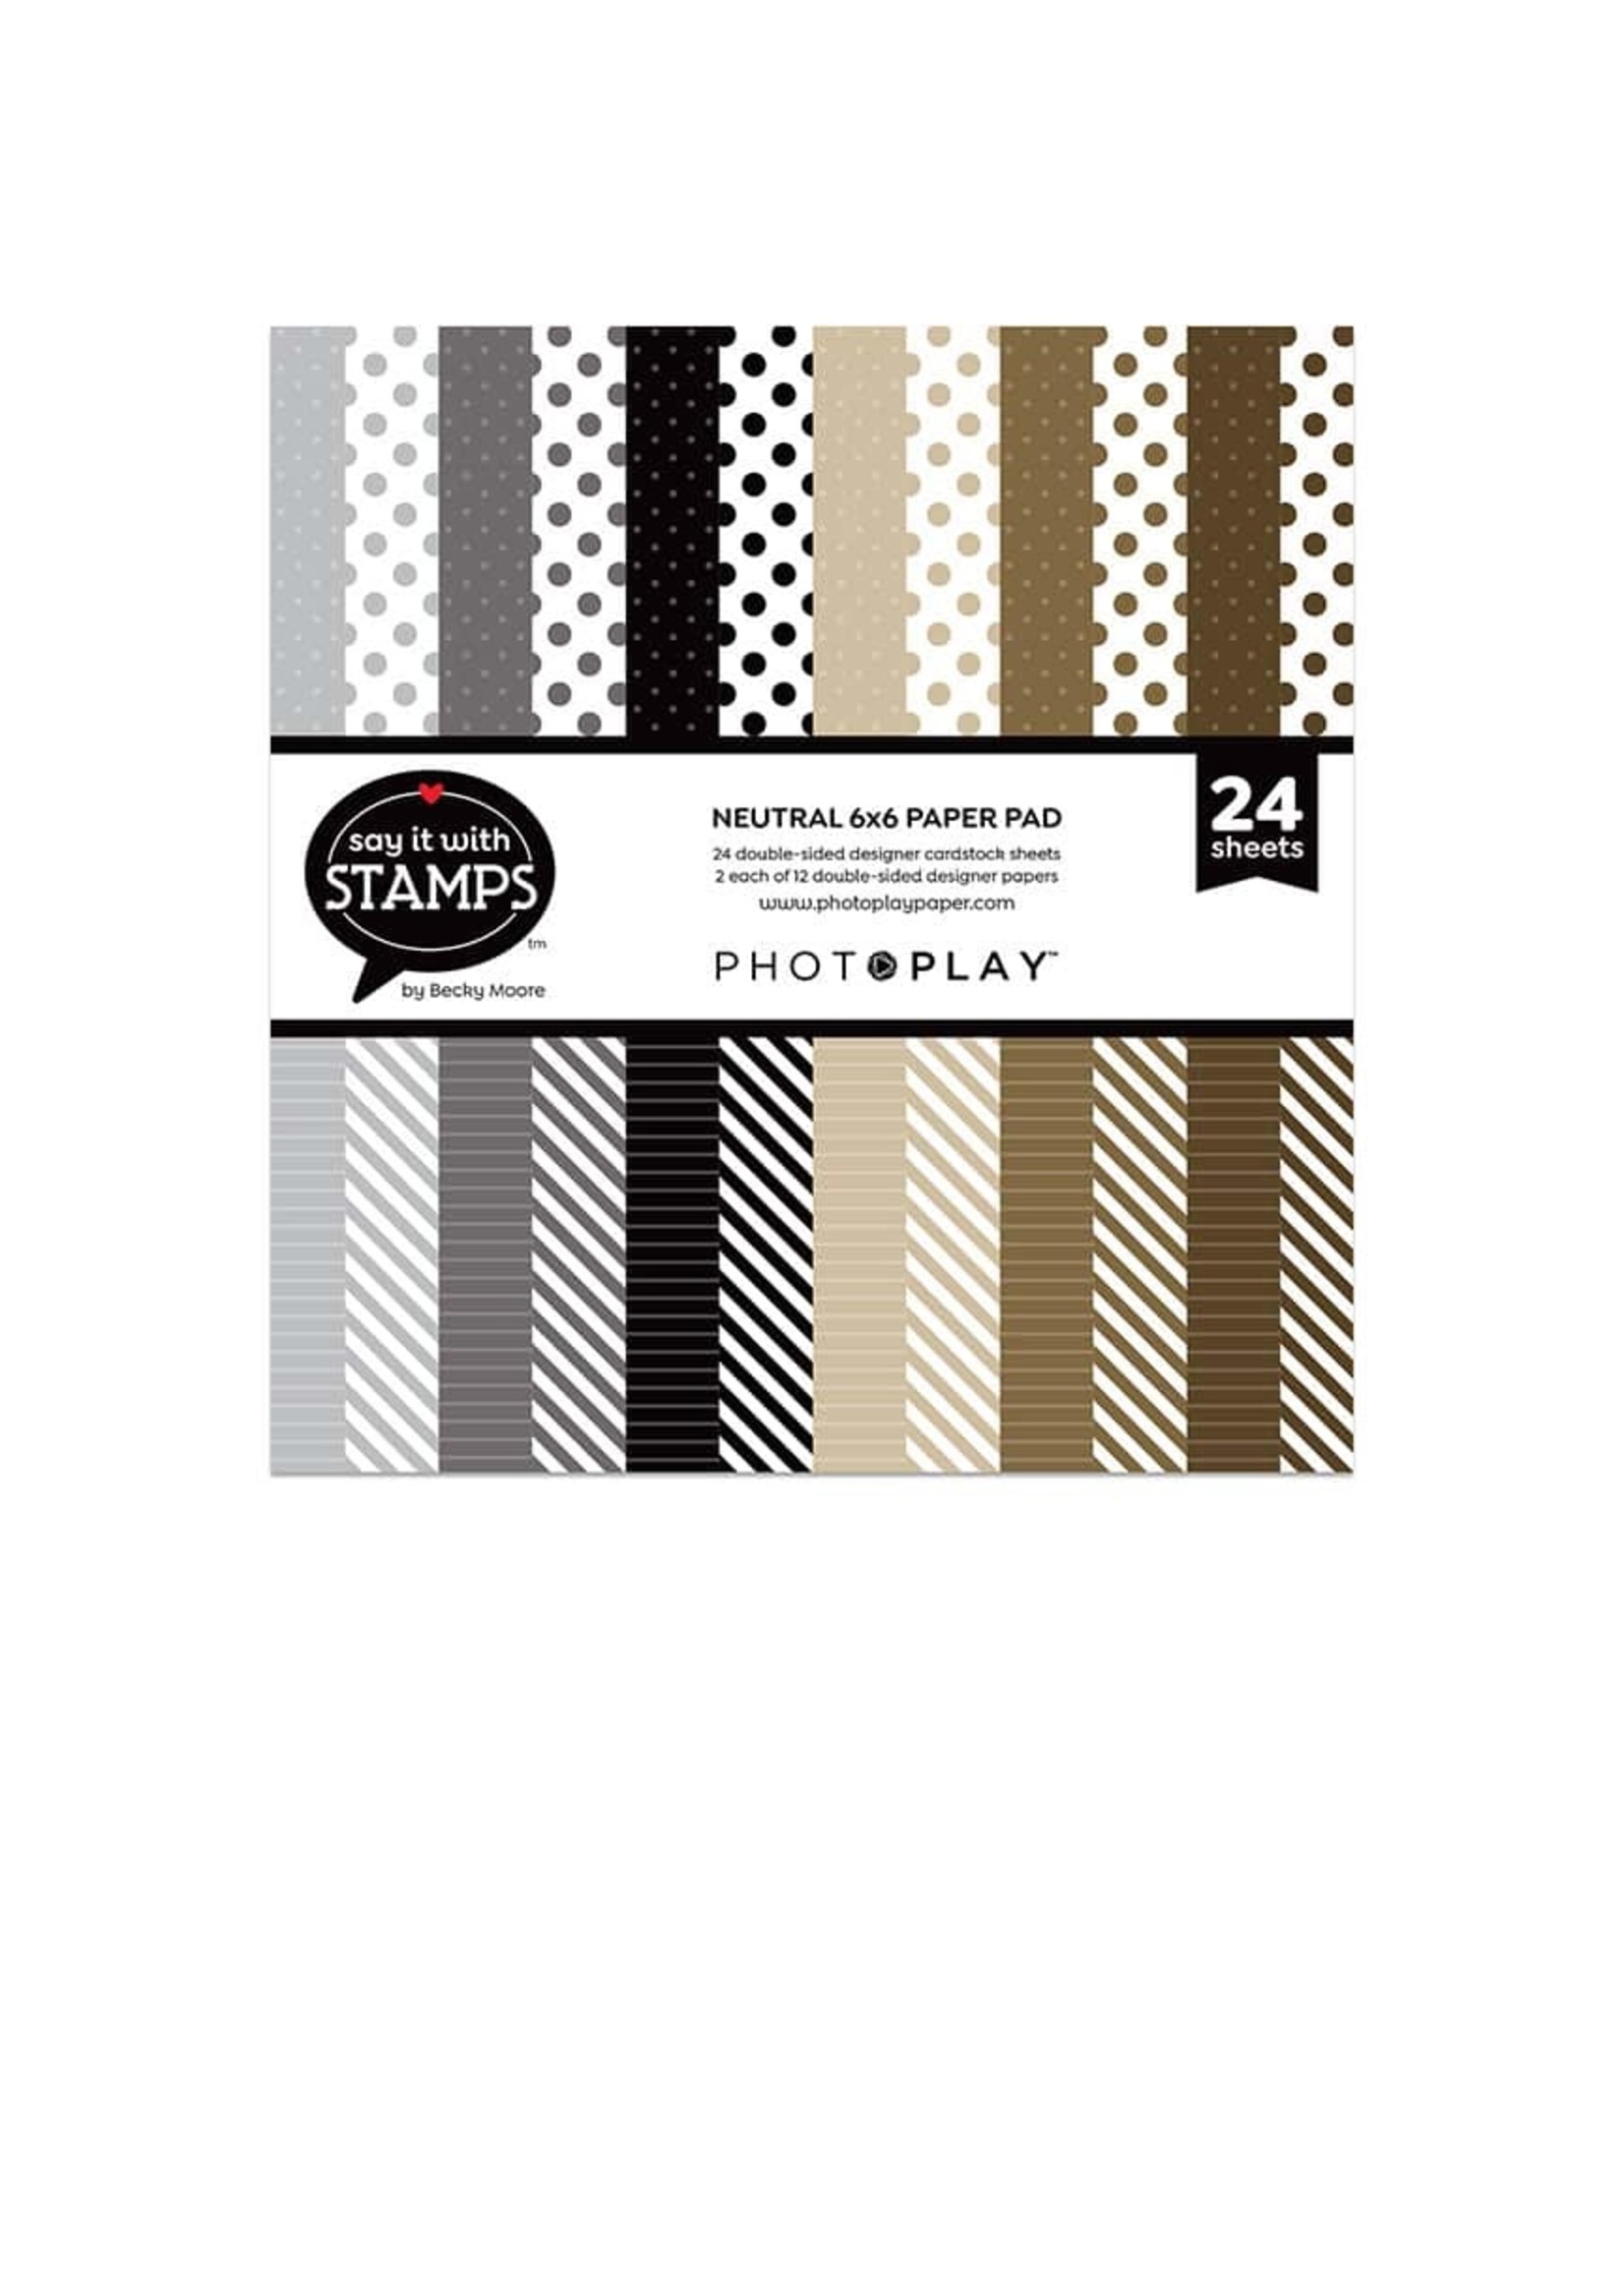 Photoplay Neutral dots & stripes 6x6 Pad